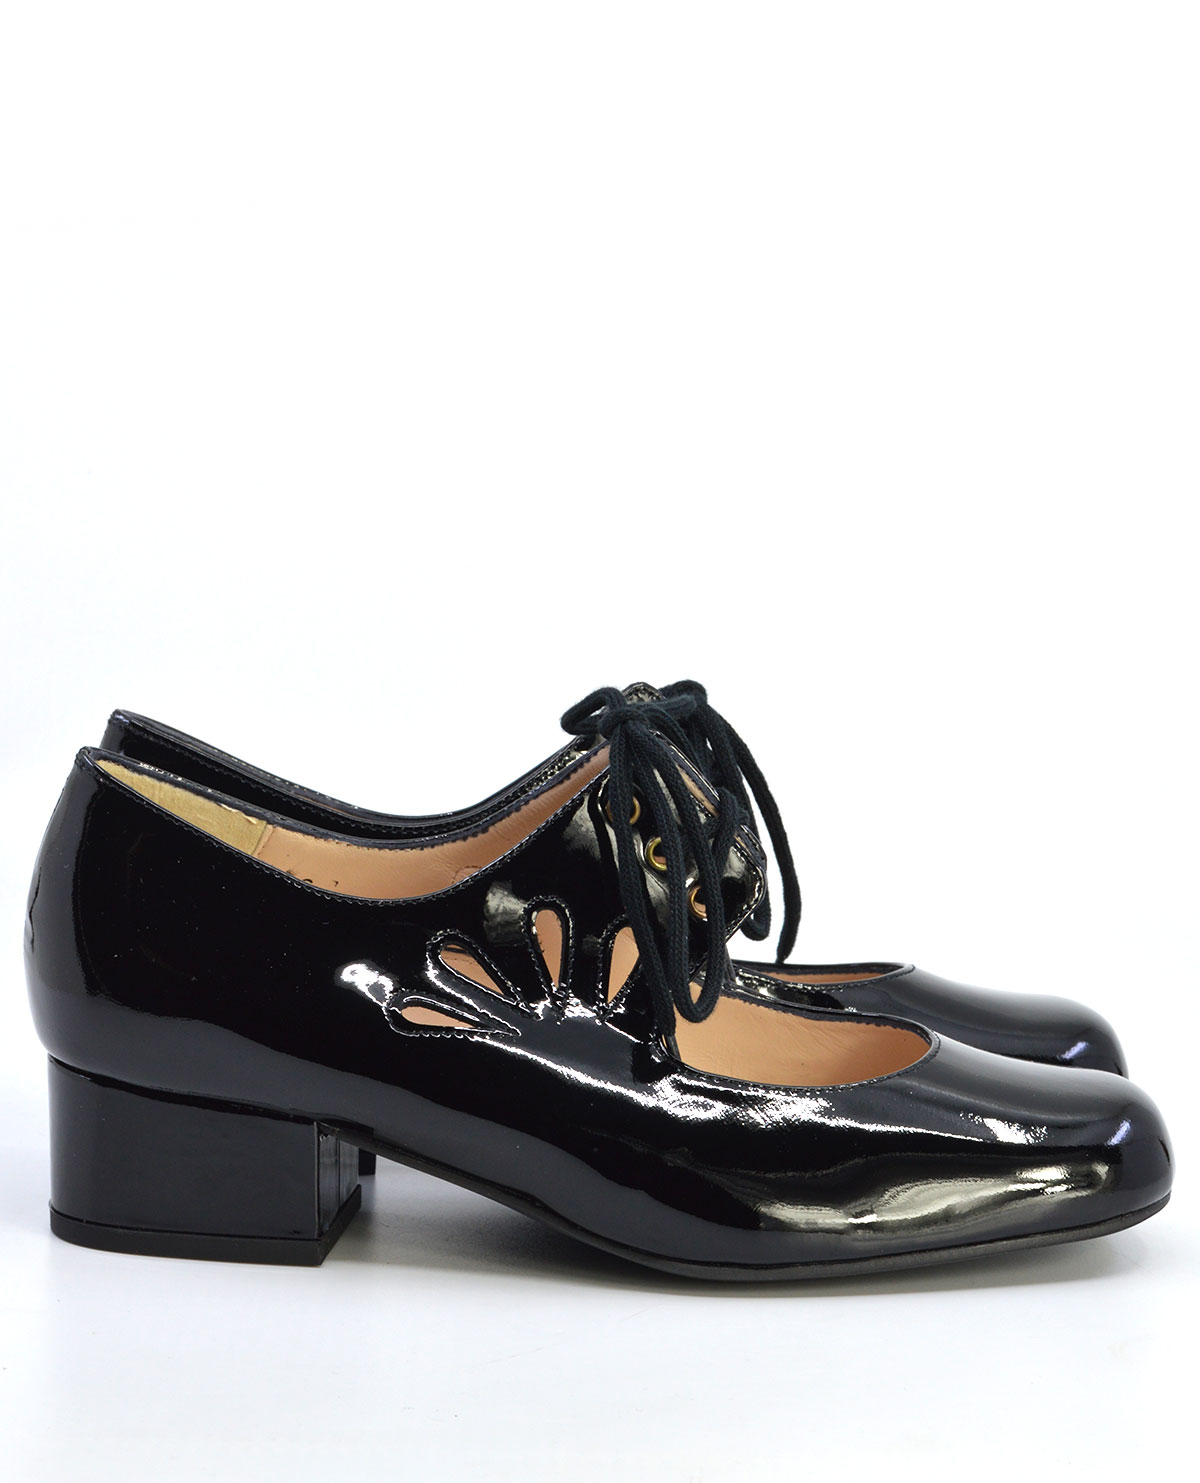 Bloch Ladies Jason Samuels Smith Patent Tap Shoe - The DanceWEAR Shoppe